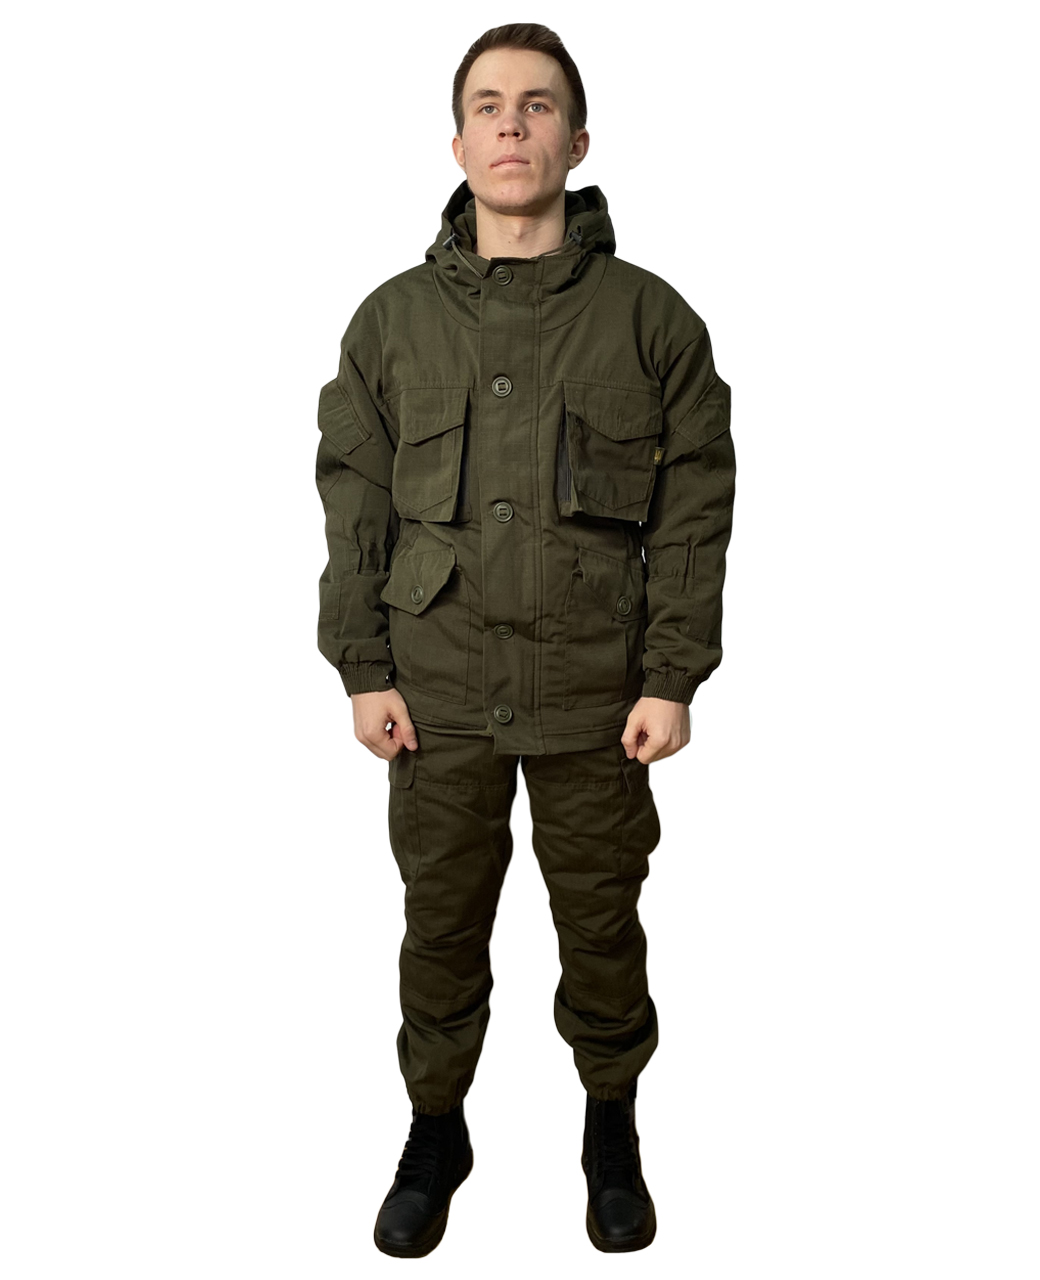 Демисезонный костюм Горка-8 премиум рип-стоп (олива) 